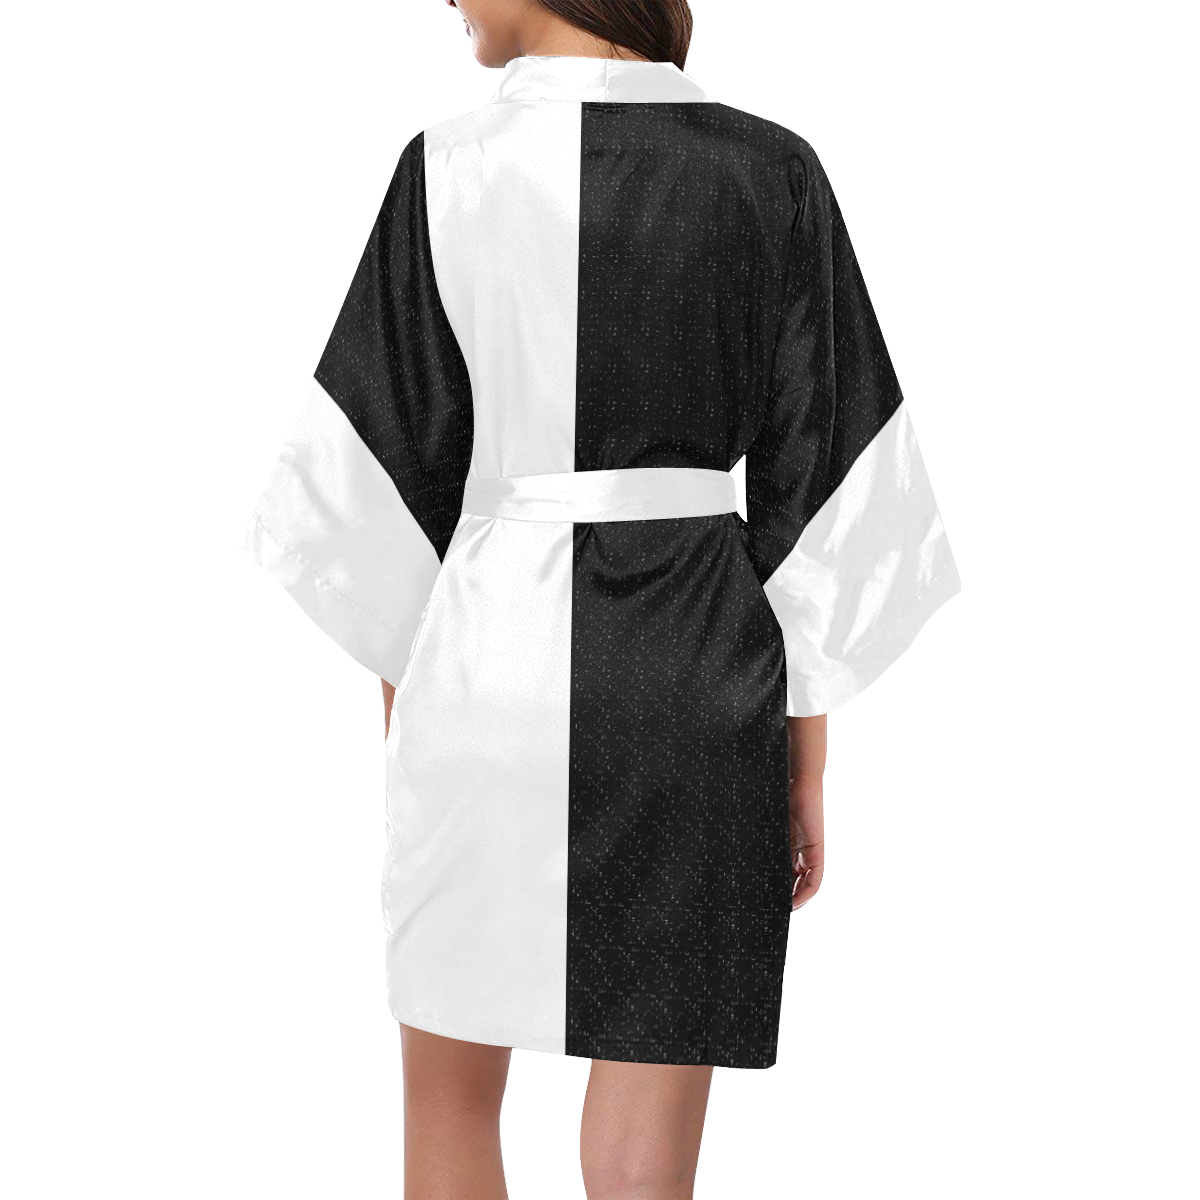 French Maid Black and White Kimono Robe